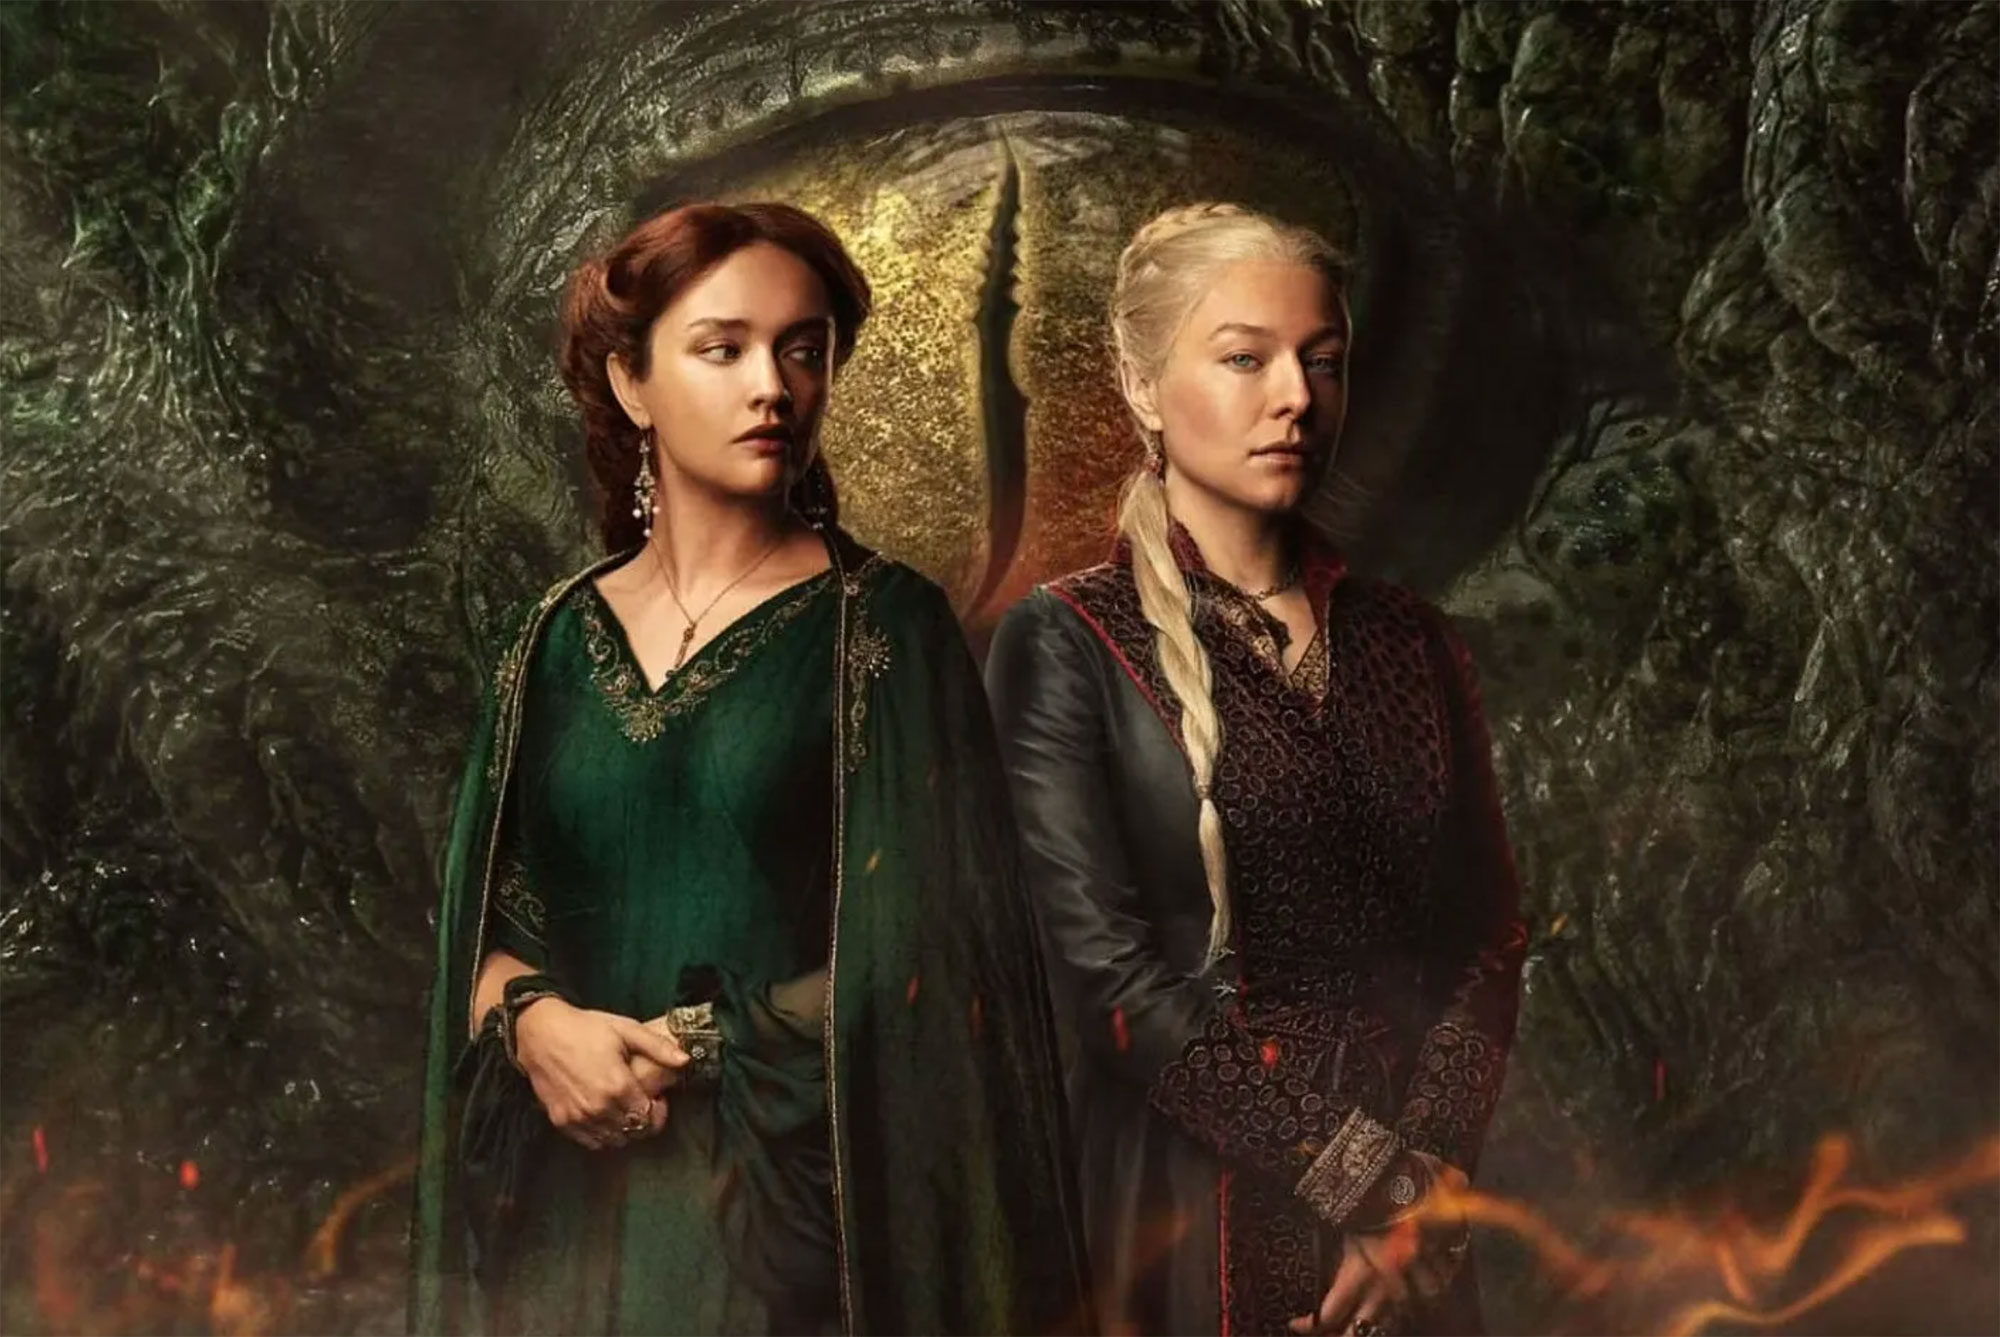 ¿Quién es mejor líder, Rhaenyra Targaryen o Alicent Hightower? House of the dragon